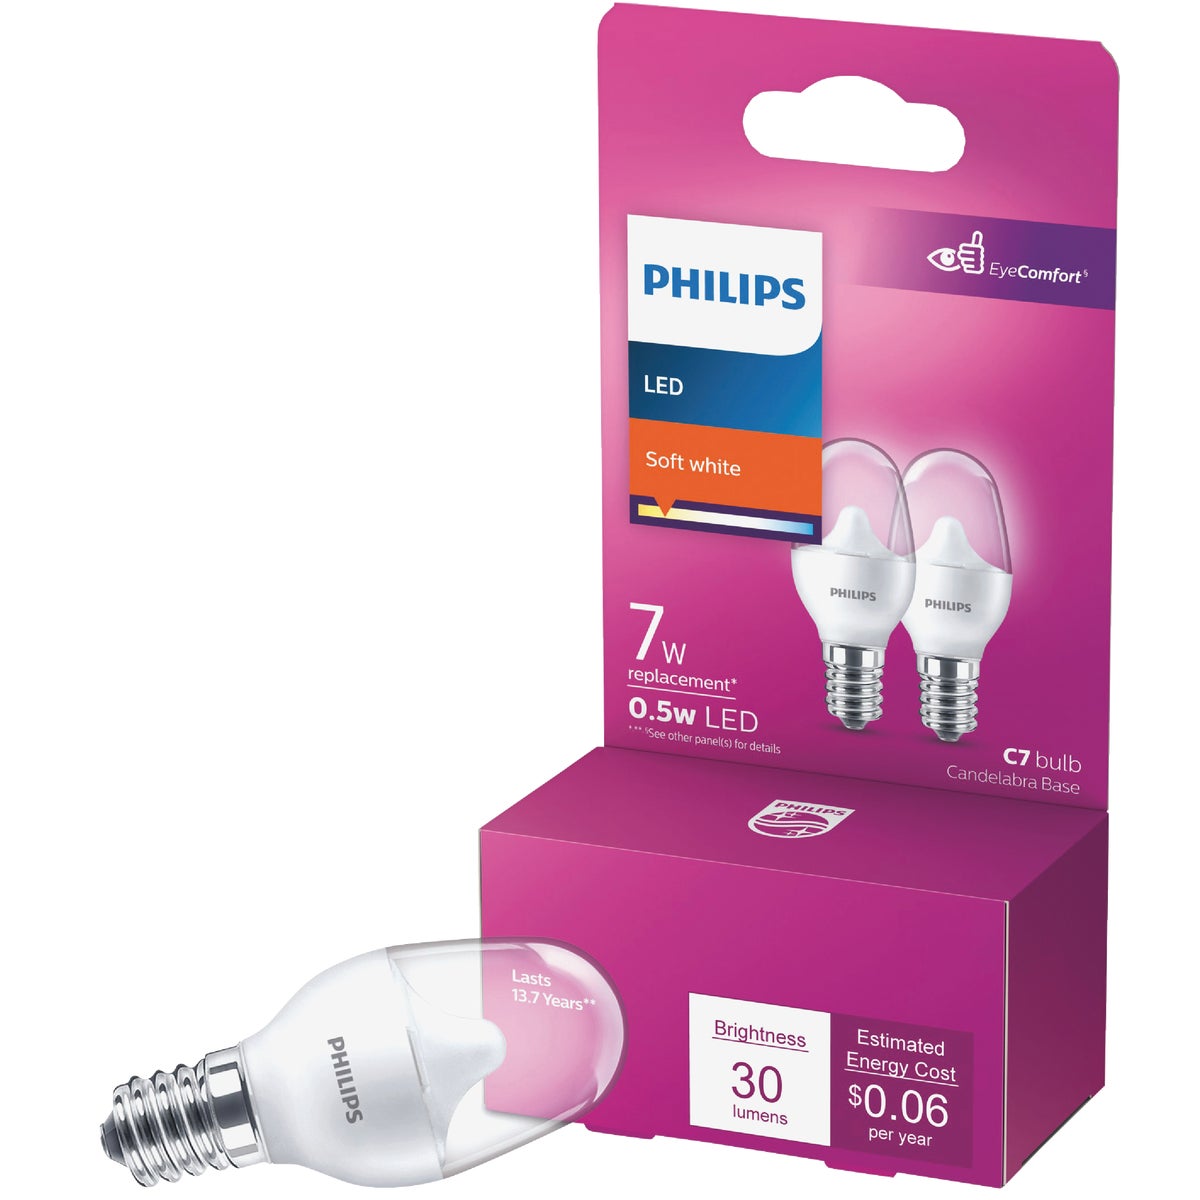 Philips 7W Equivalent Soft White C7 Candelabra LED Night-Light Bulb